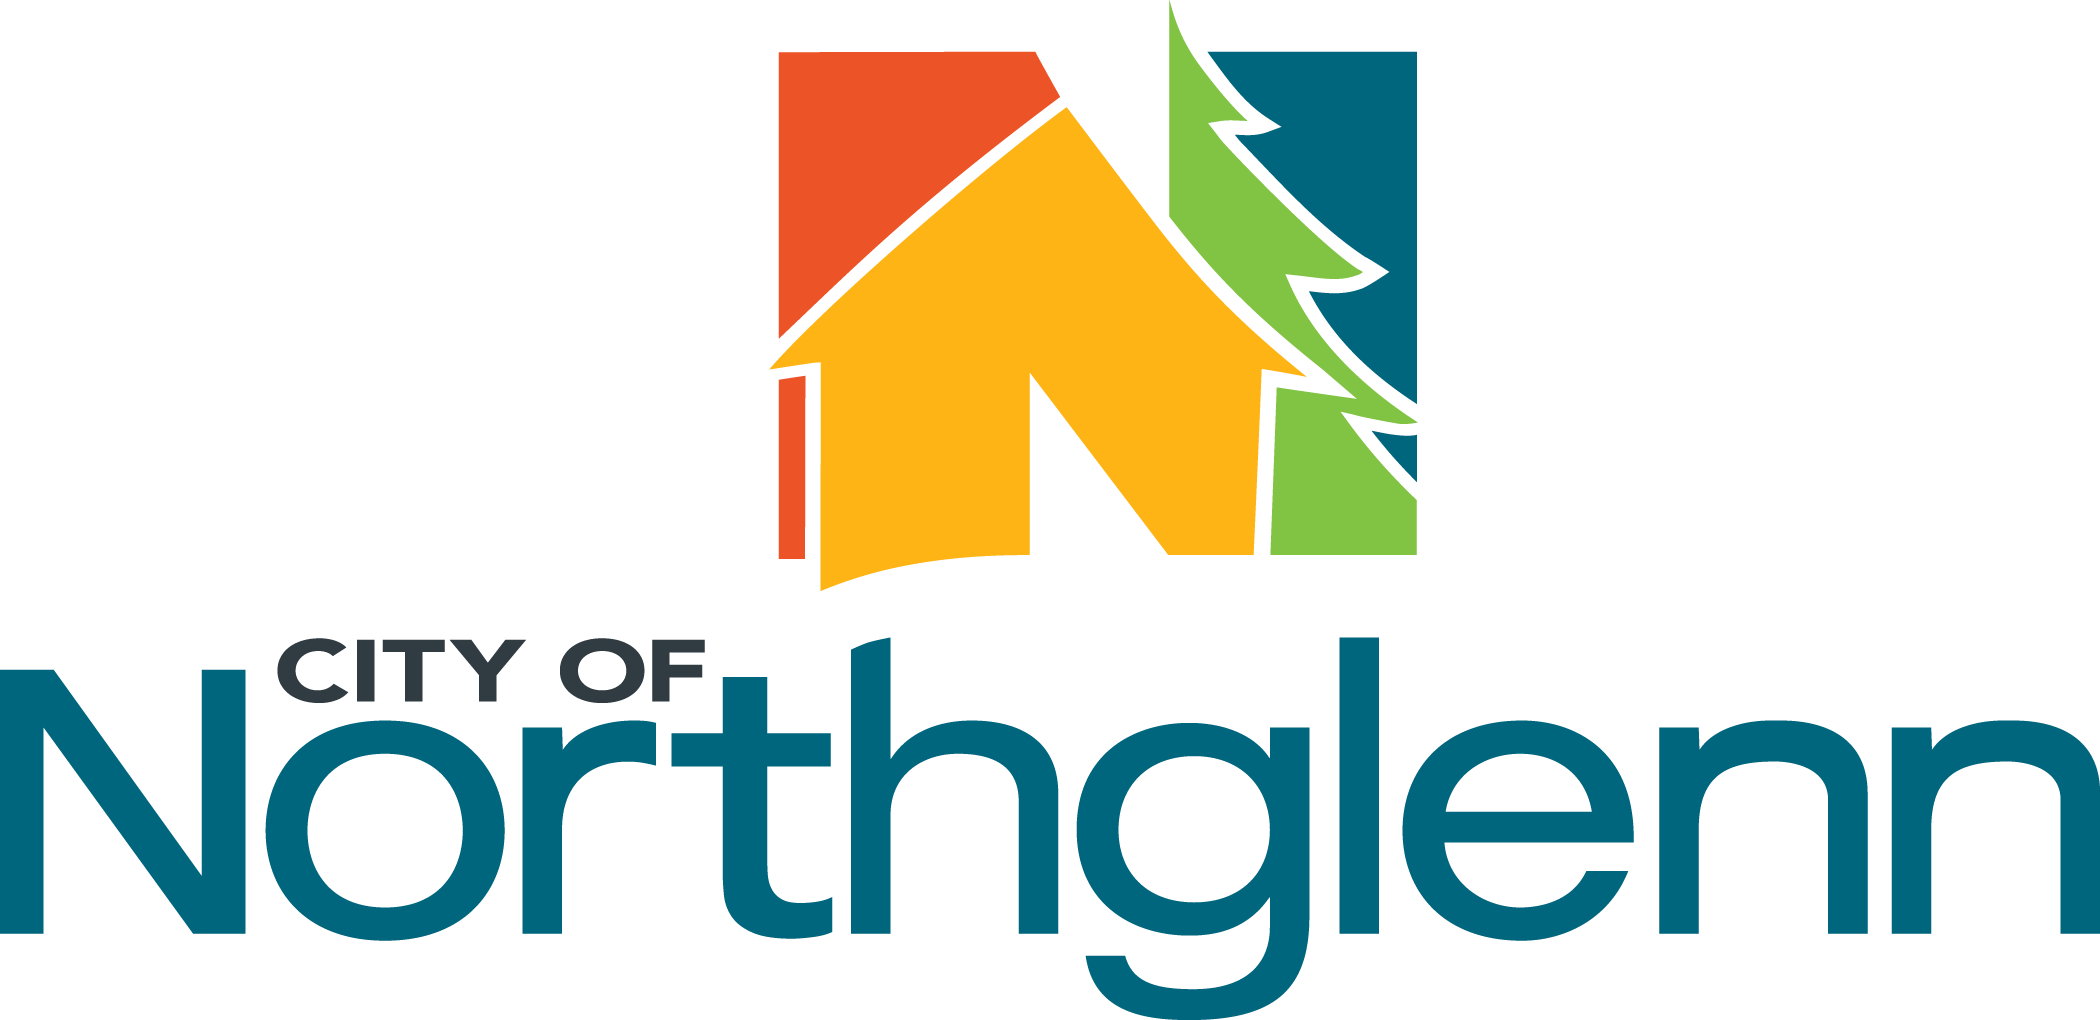 City of Northglenn Colorado logo